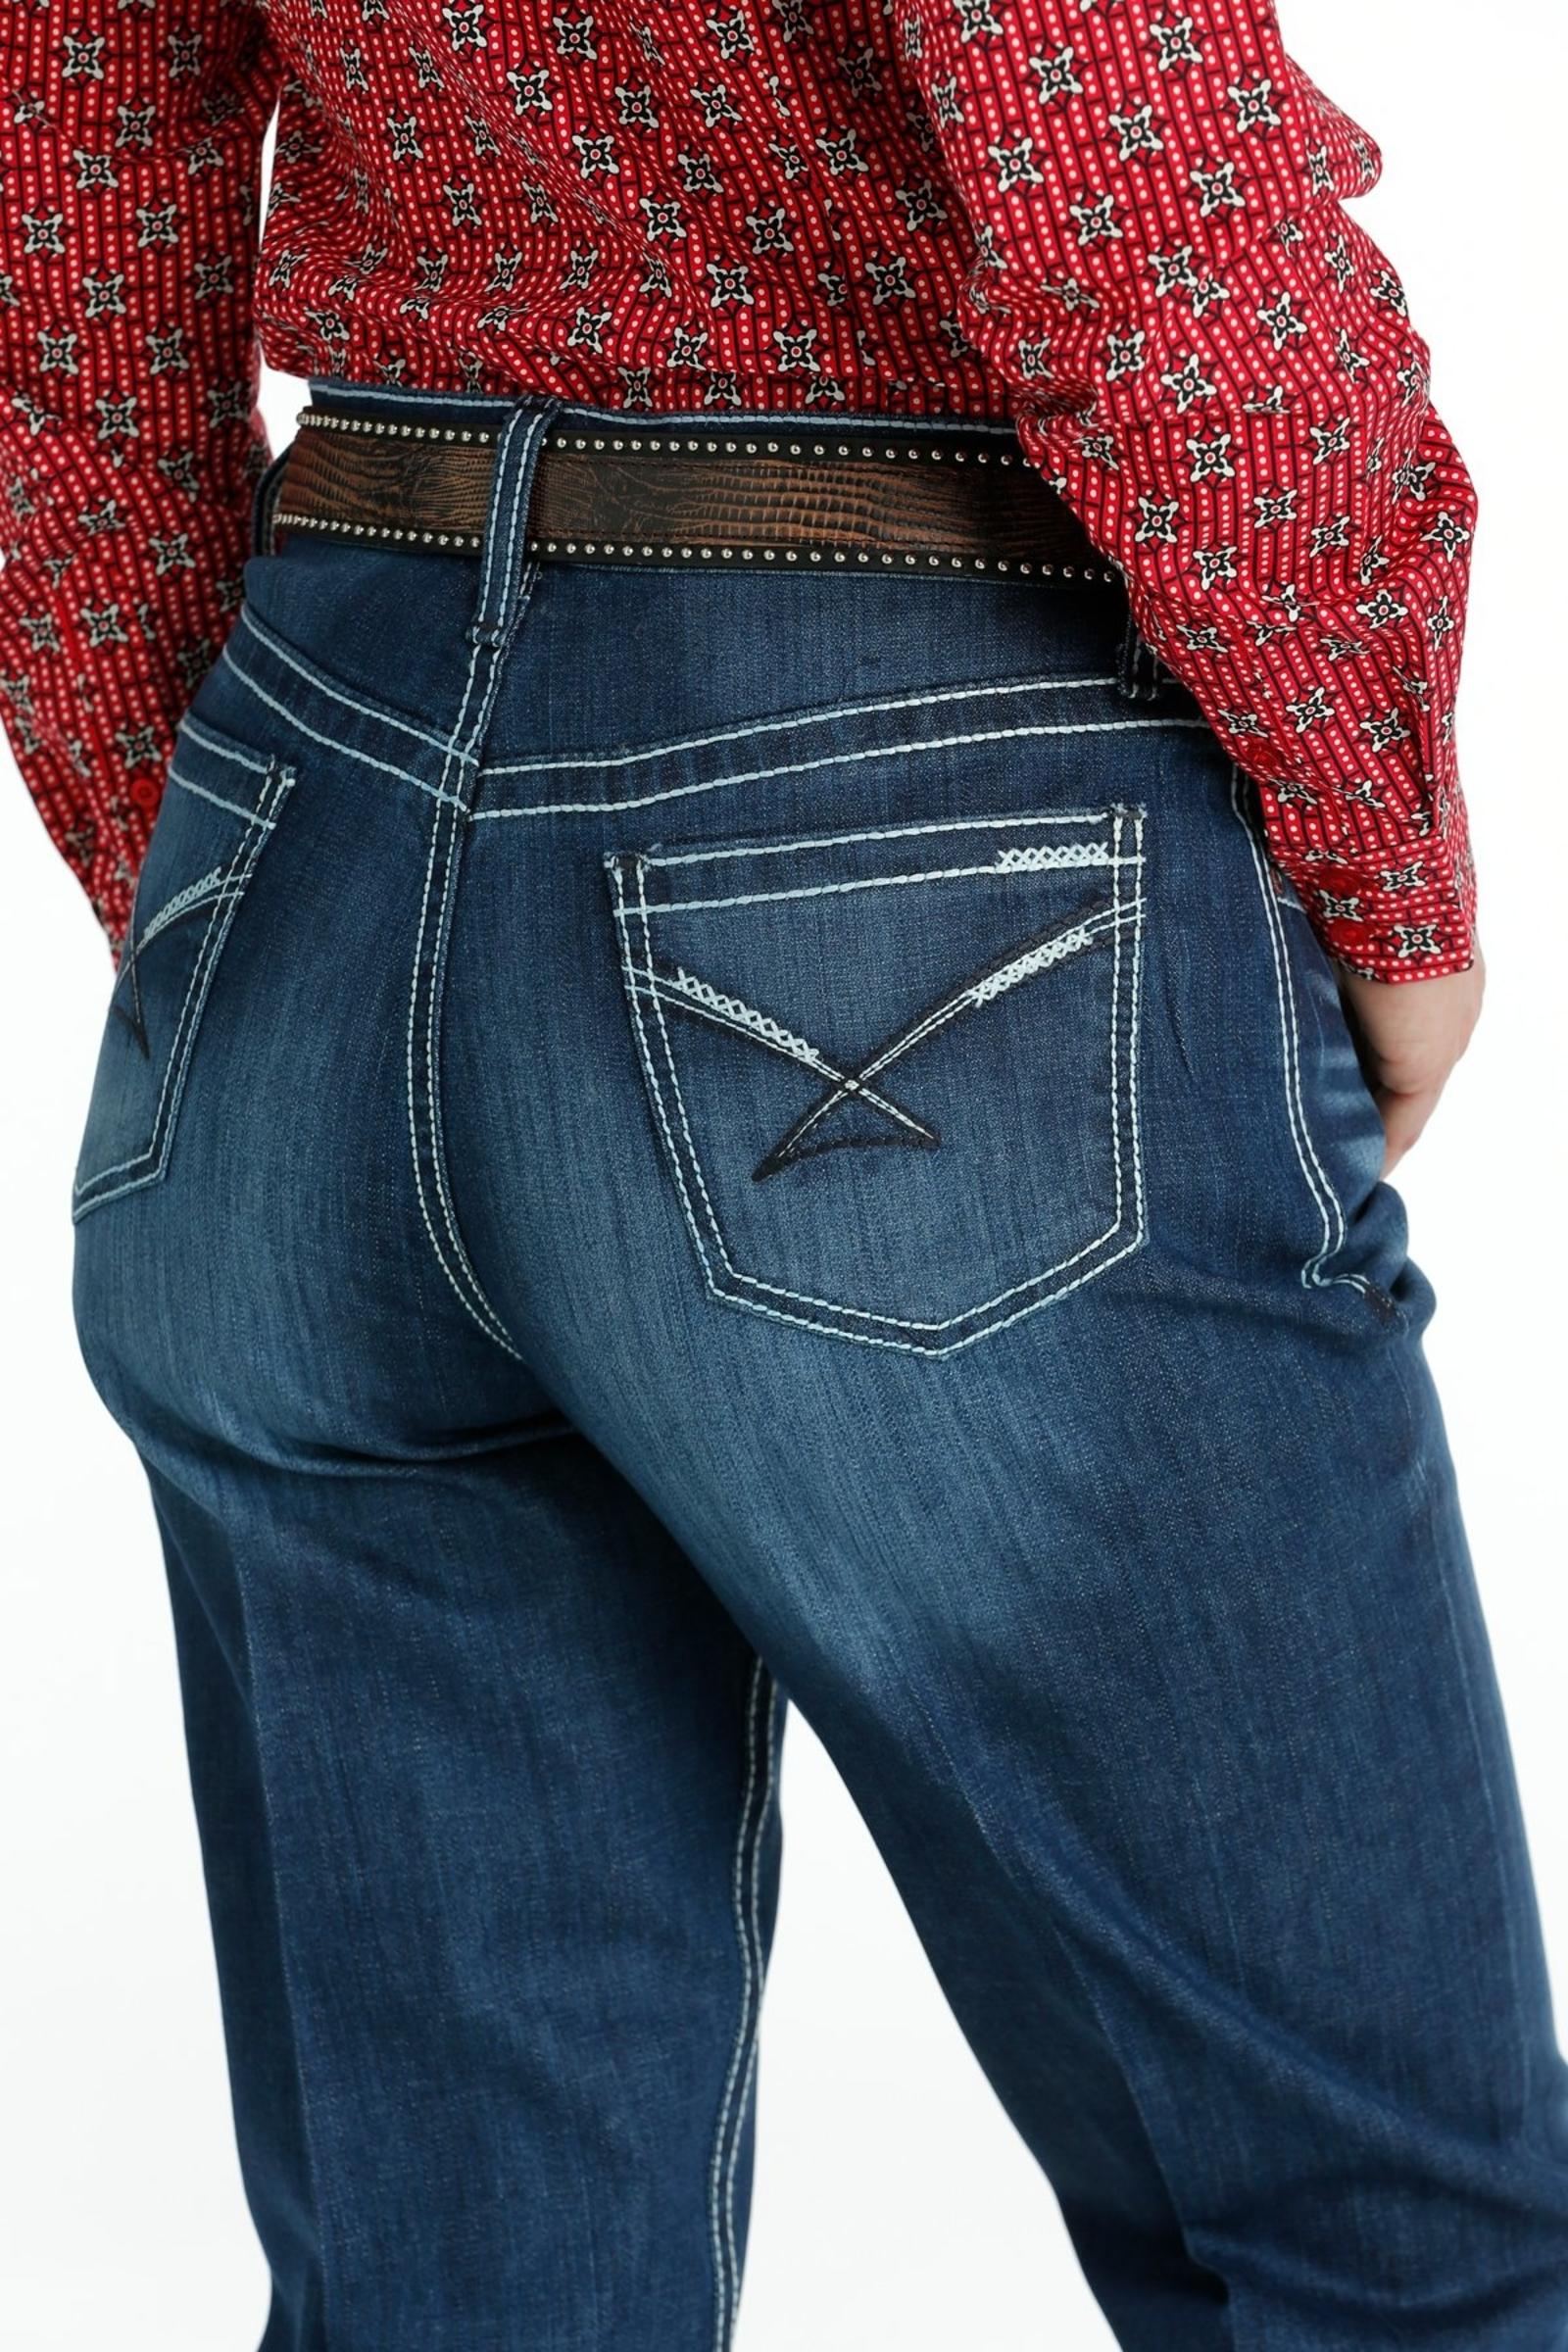 Cinch Jeans Women's Emerson Relaxed Fit - Dark Stonewash